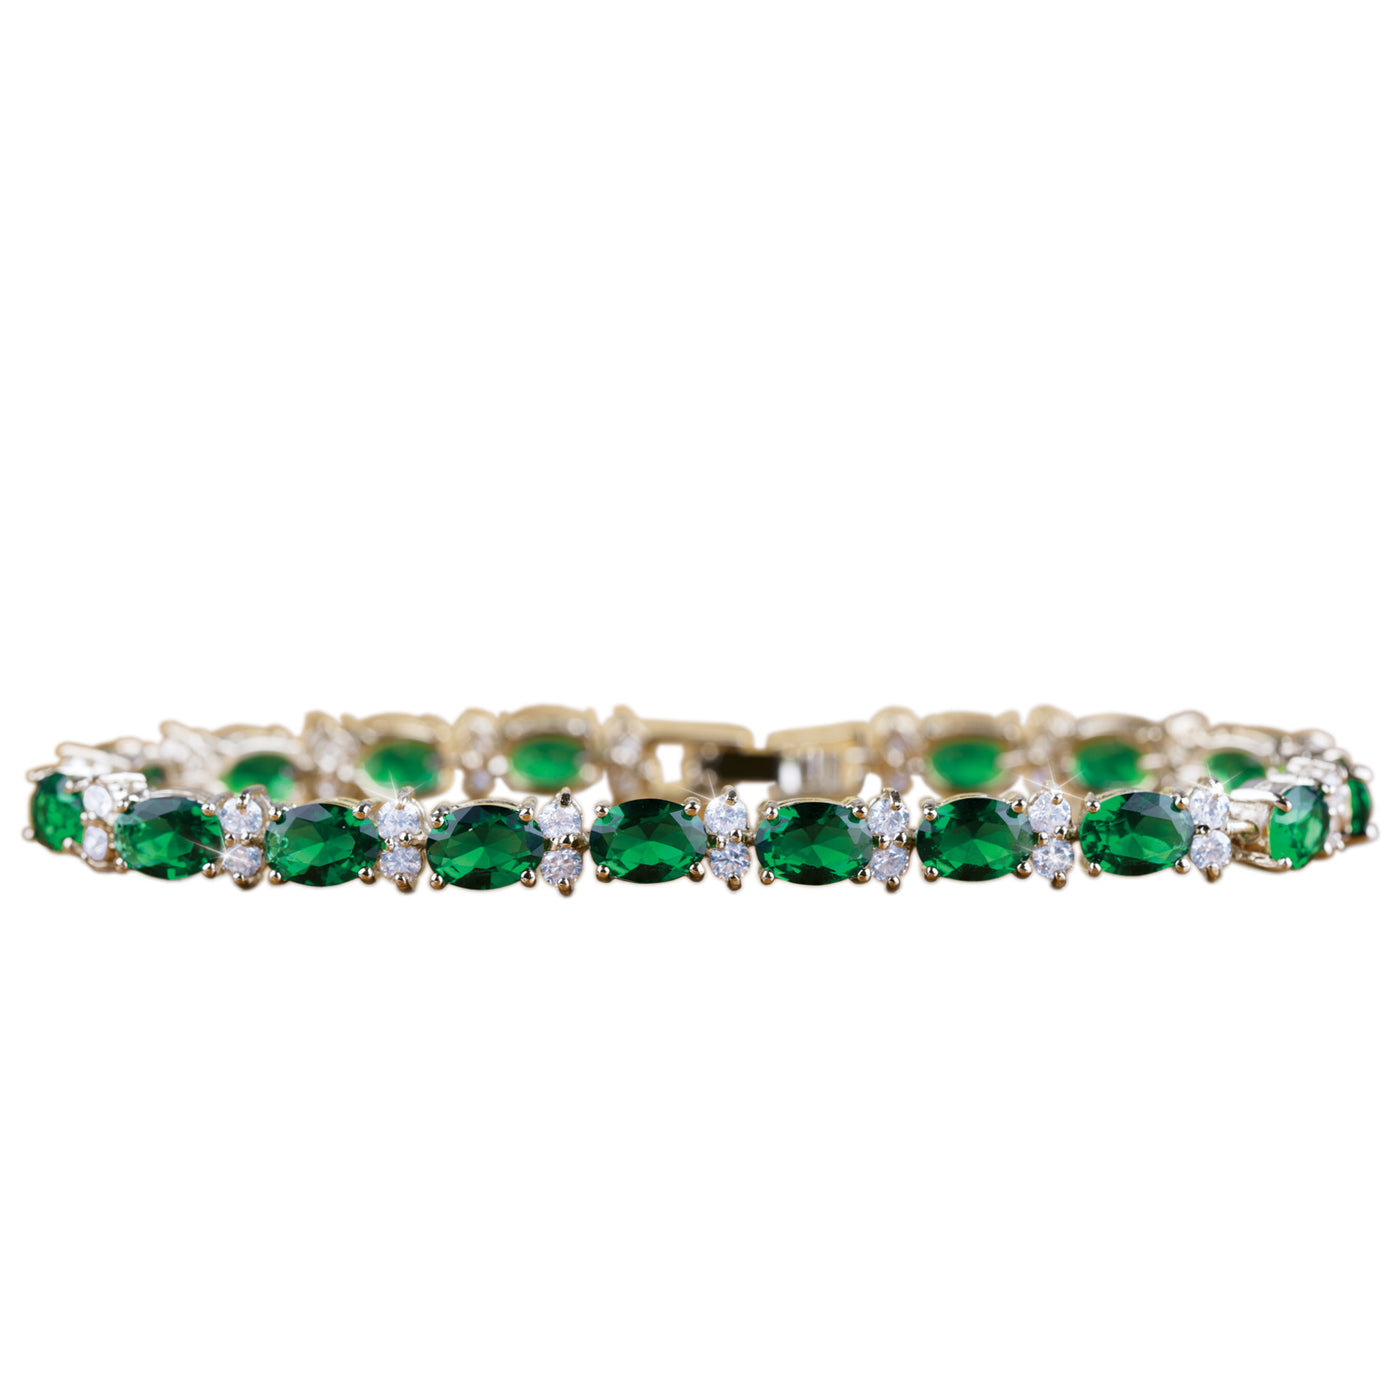 Daniel Steiger Emerald City Bracelet